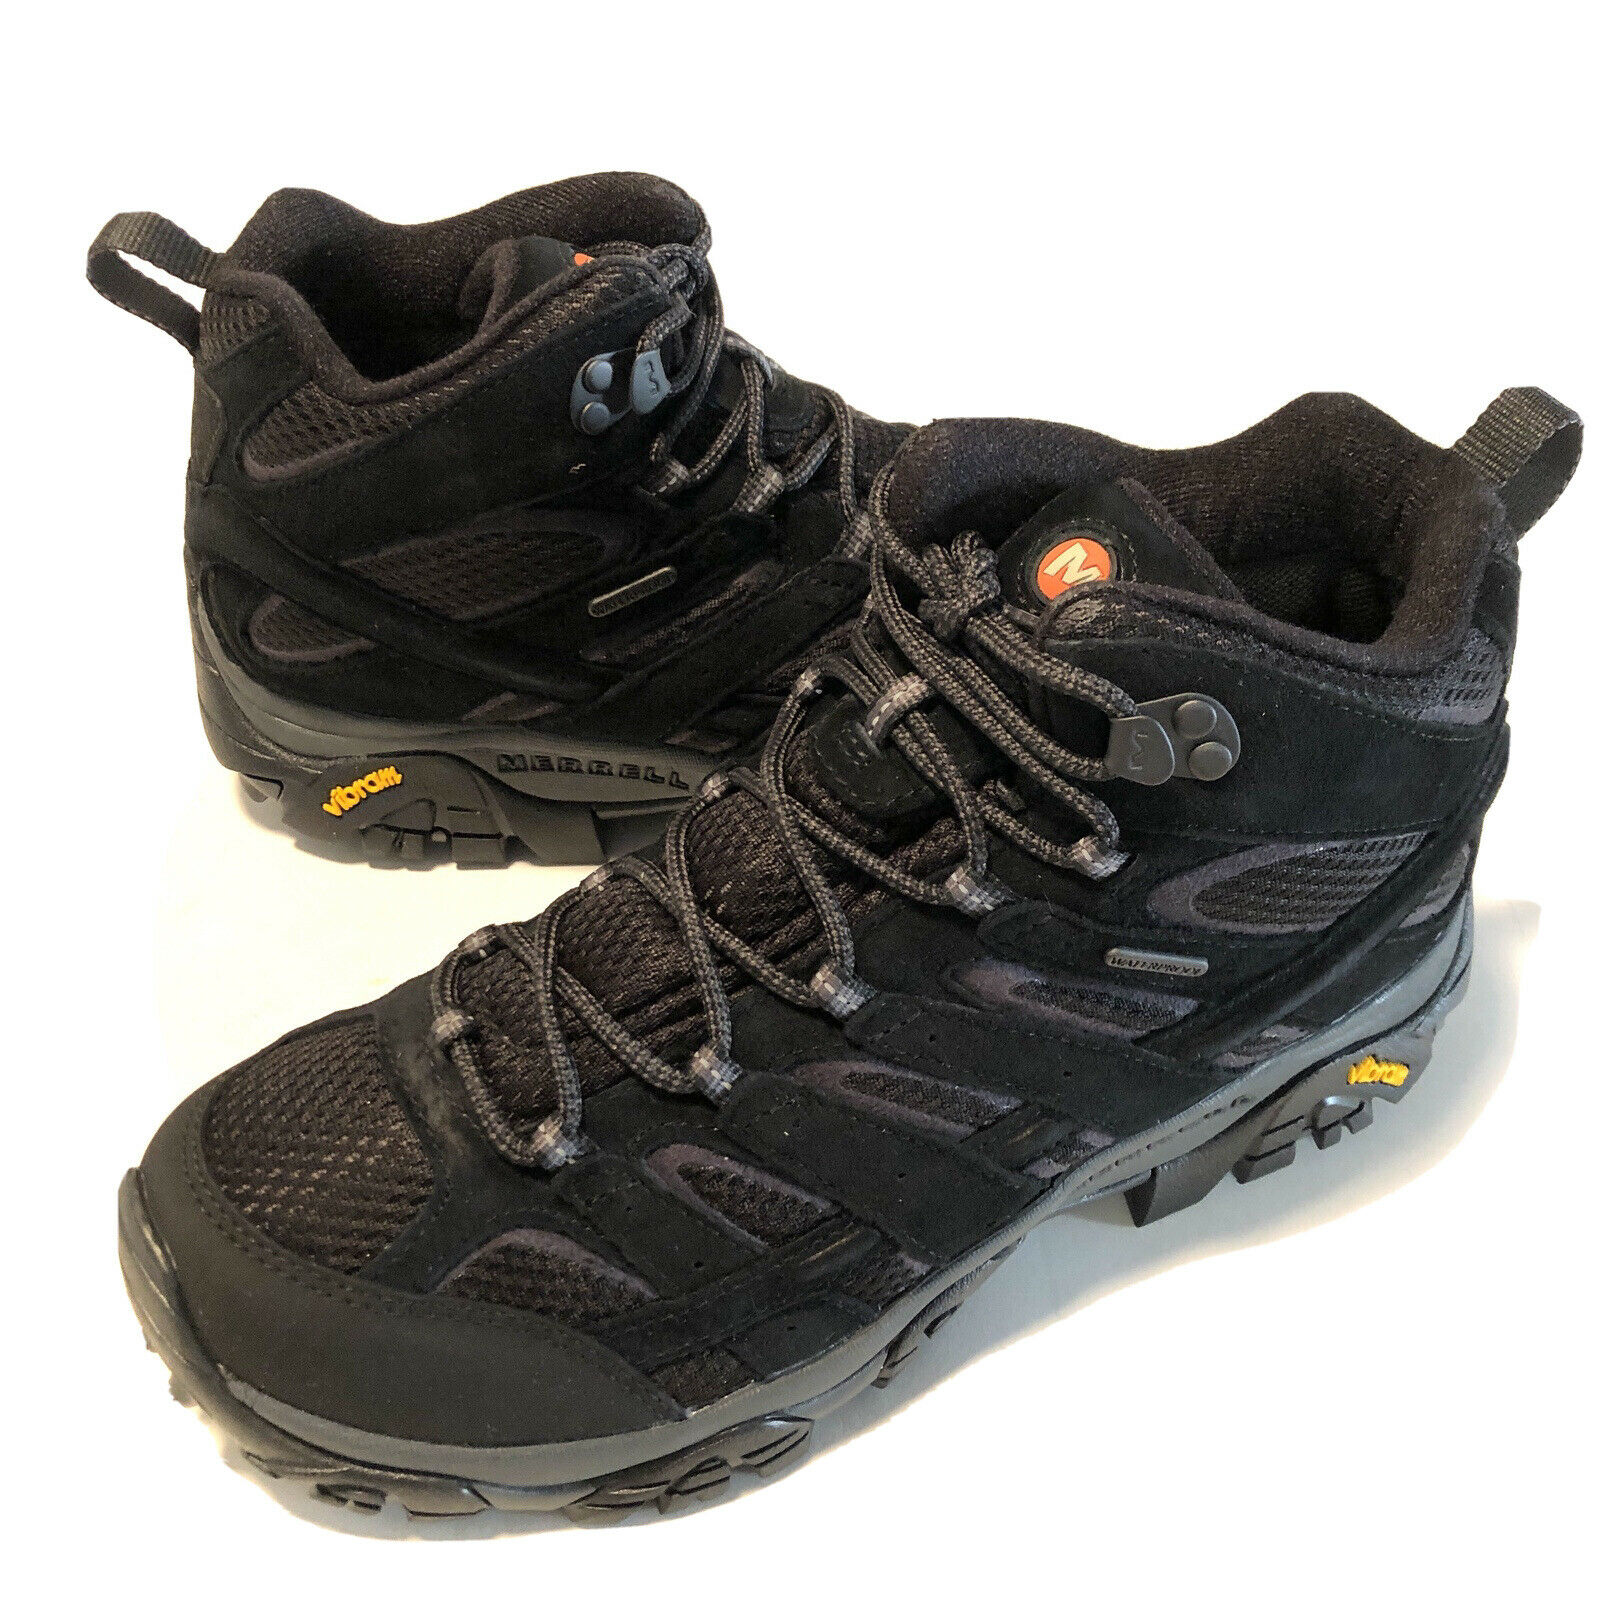 Merrell Moab 2 MID WP Waterproof Black Hiking Boot Shoe Men's Size 9.5